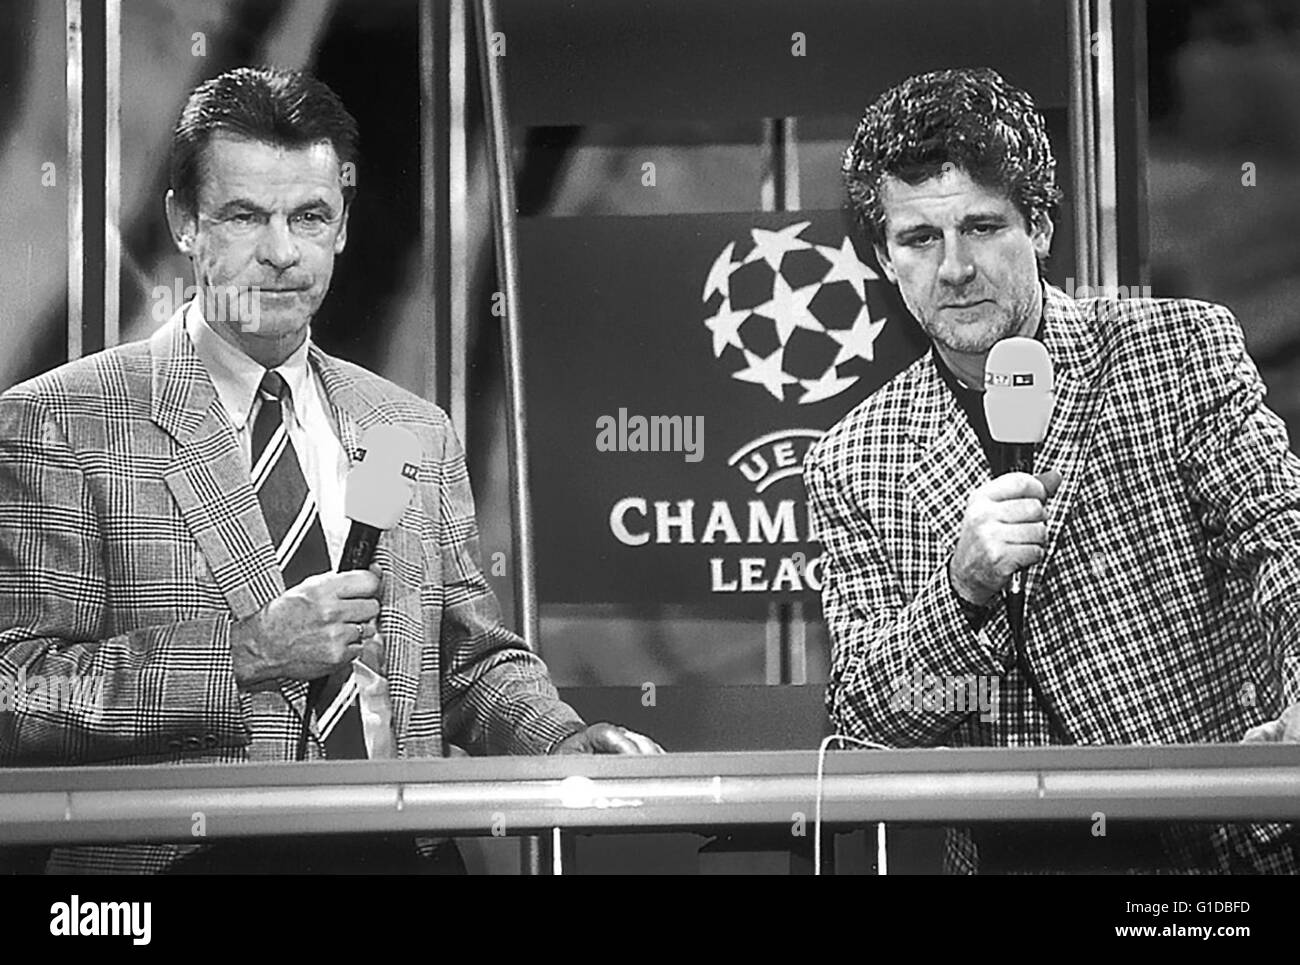 Champions League (TV-Show) / Ottmar Hitzfeld / Marcel Reif, Stock Photo